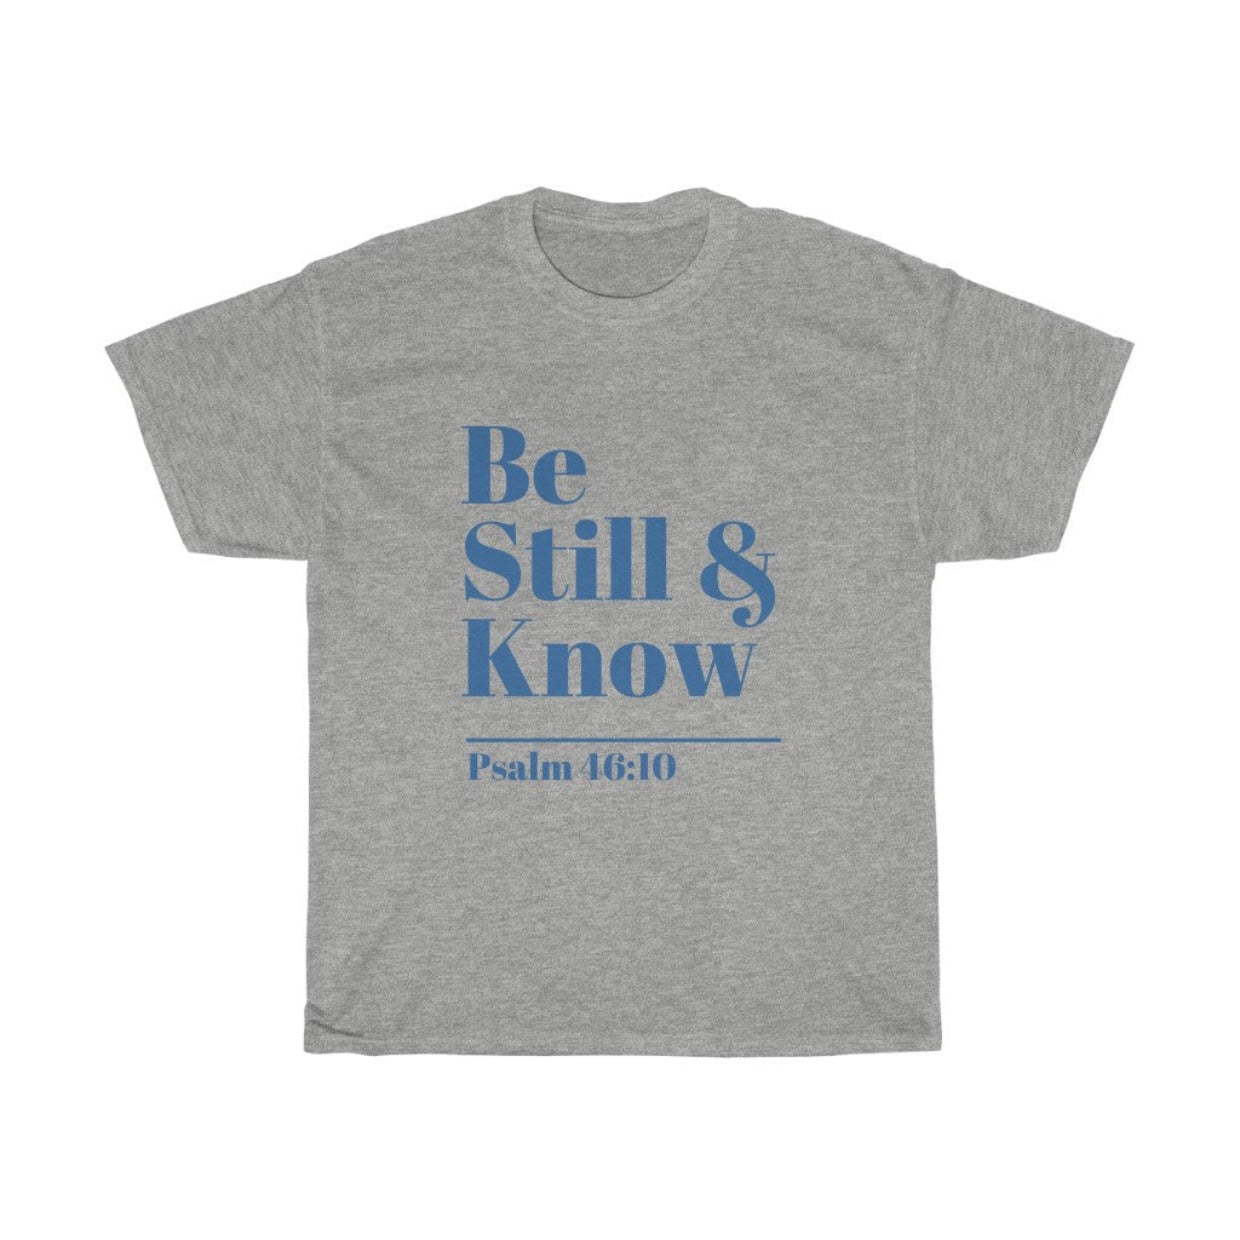 Be Still & Know - Adult Shirt  | LifeSpring Shirts - LifeSpring Shirts